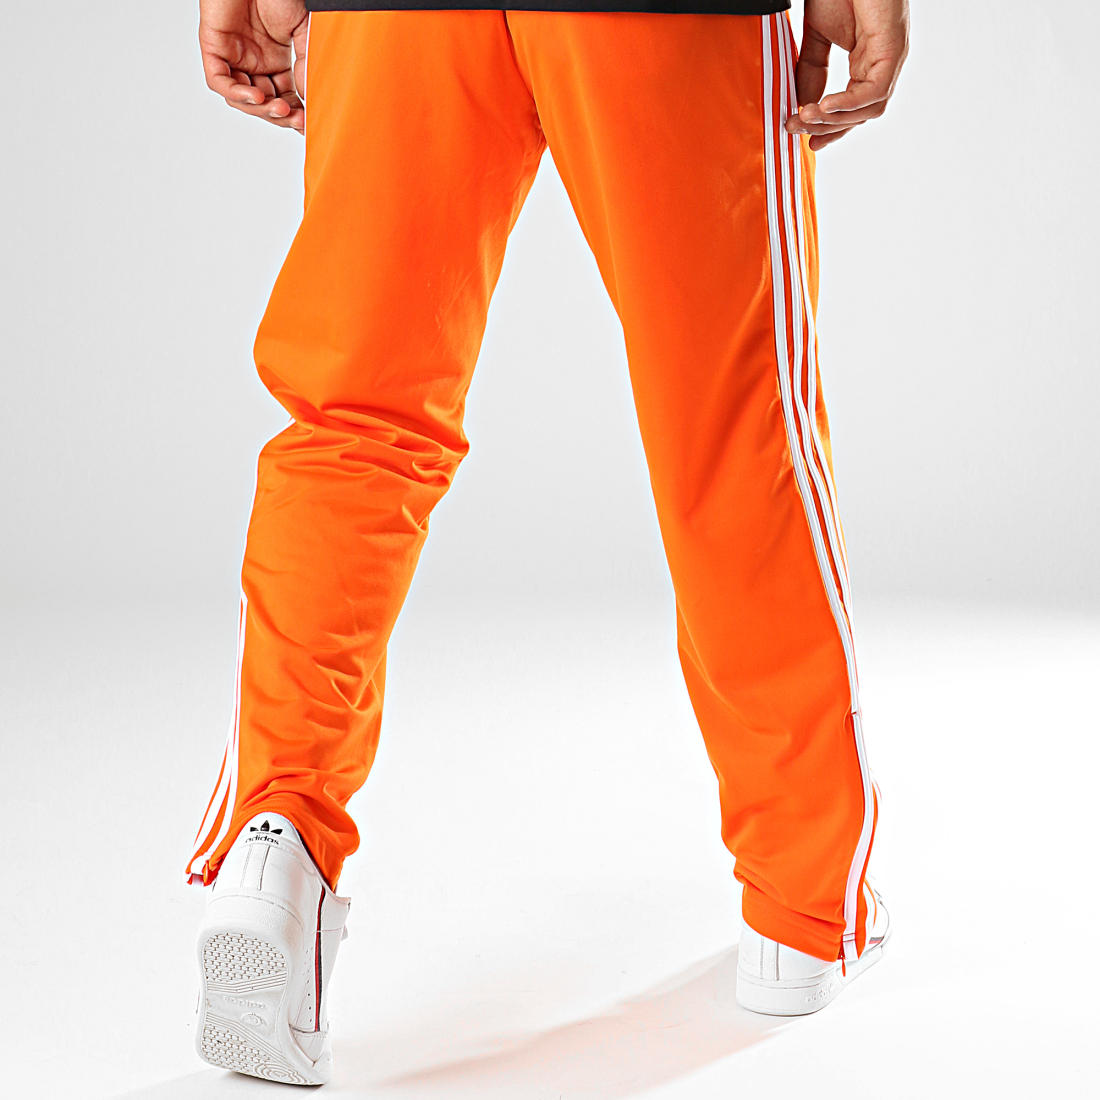 Survetement Adidas Orange Homme Enjoy Free Shipping Araldicavini It